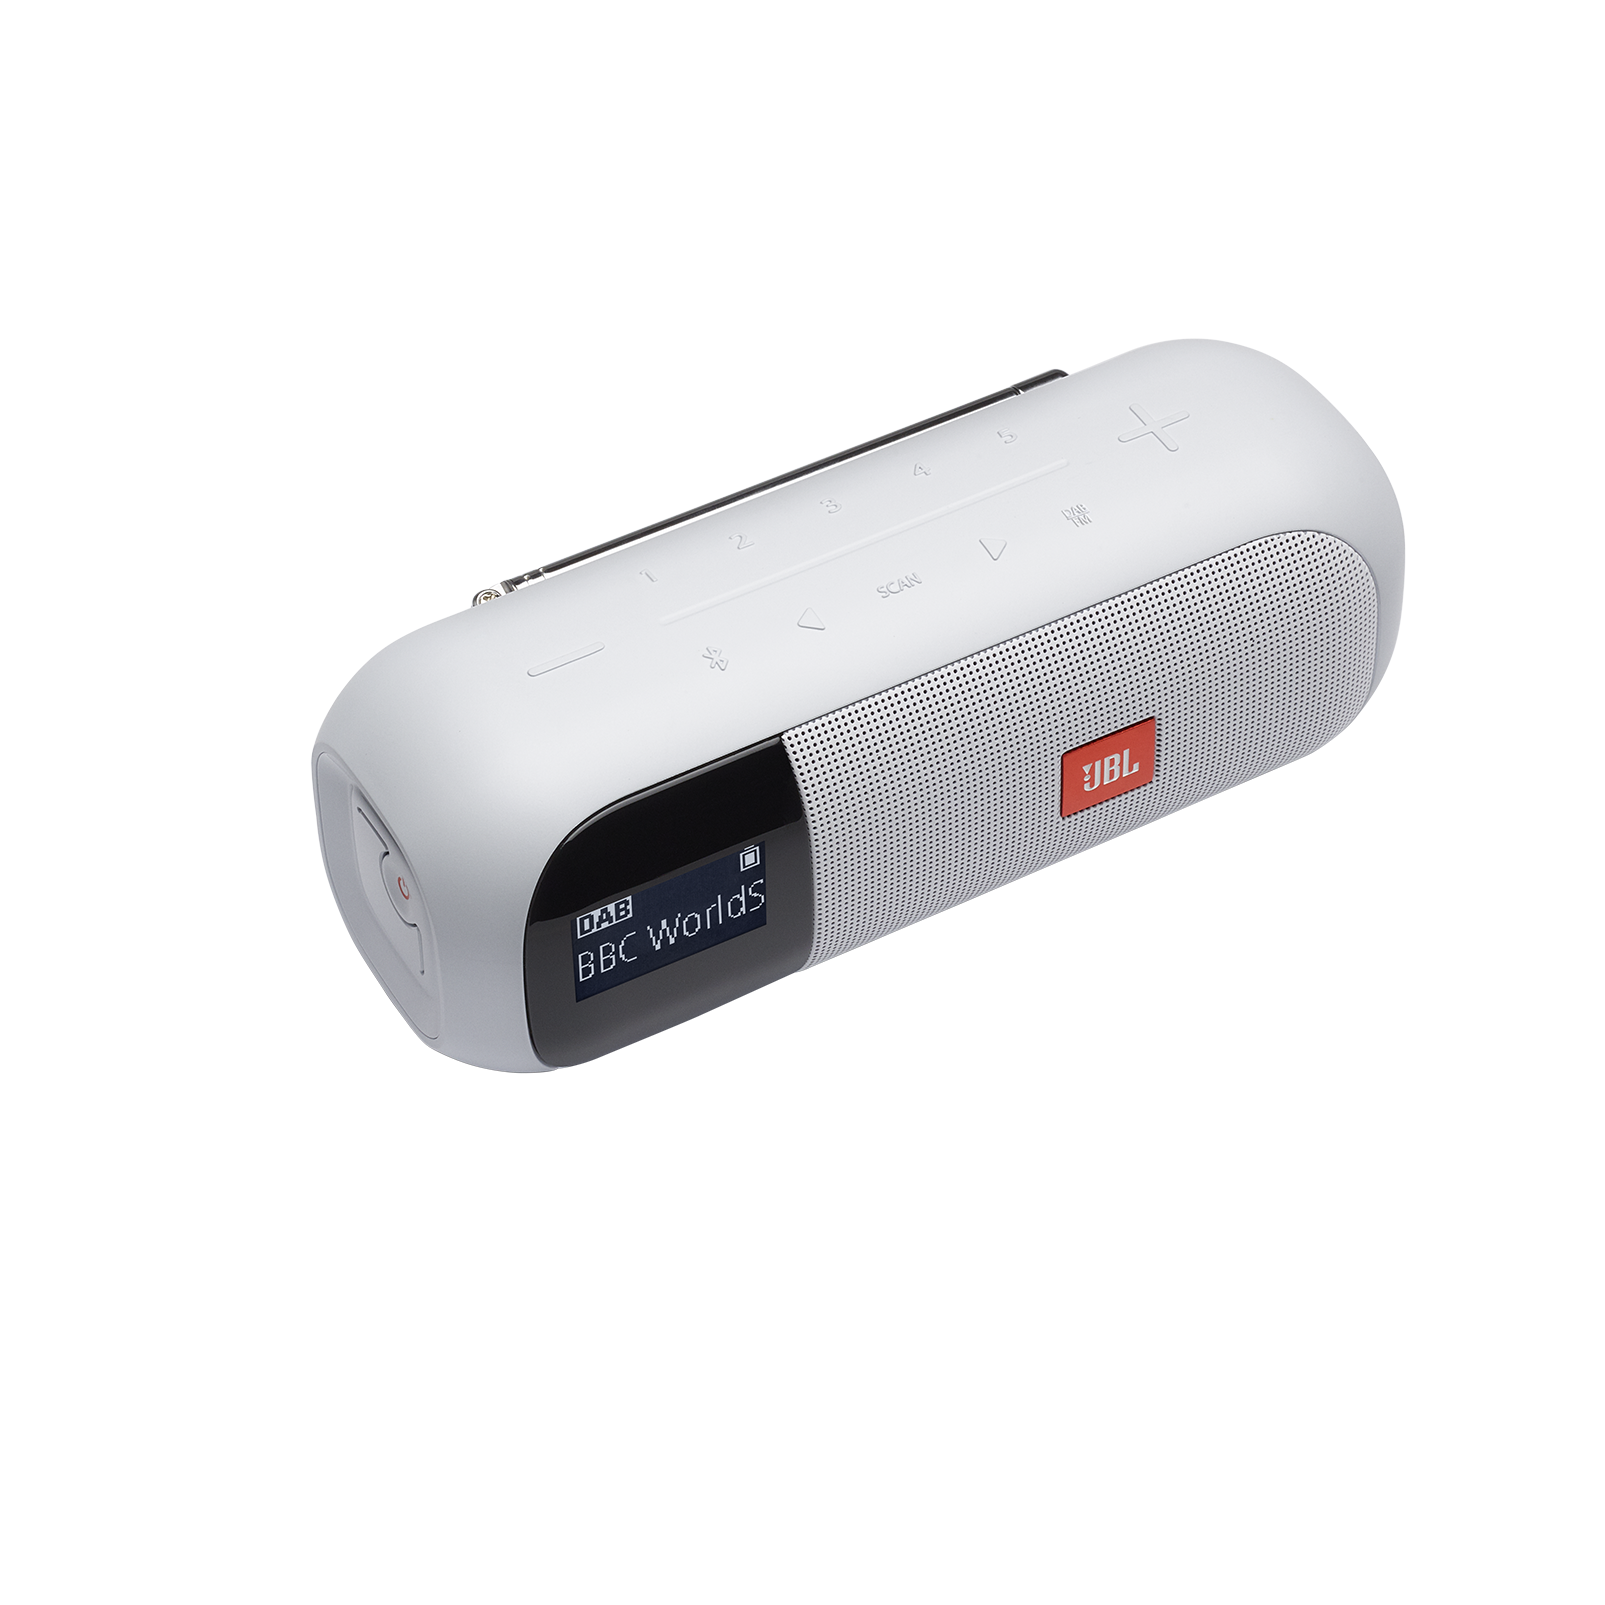 JBL Tuner 2 - White - Portable DAB/DAB+/FM radio with Bluetooth - Detailshot 1